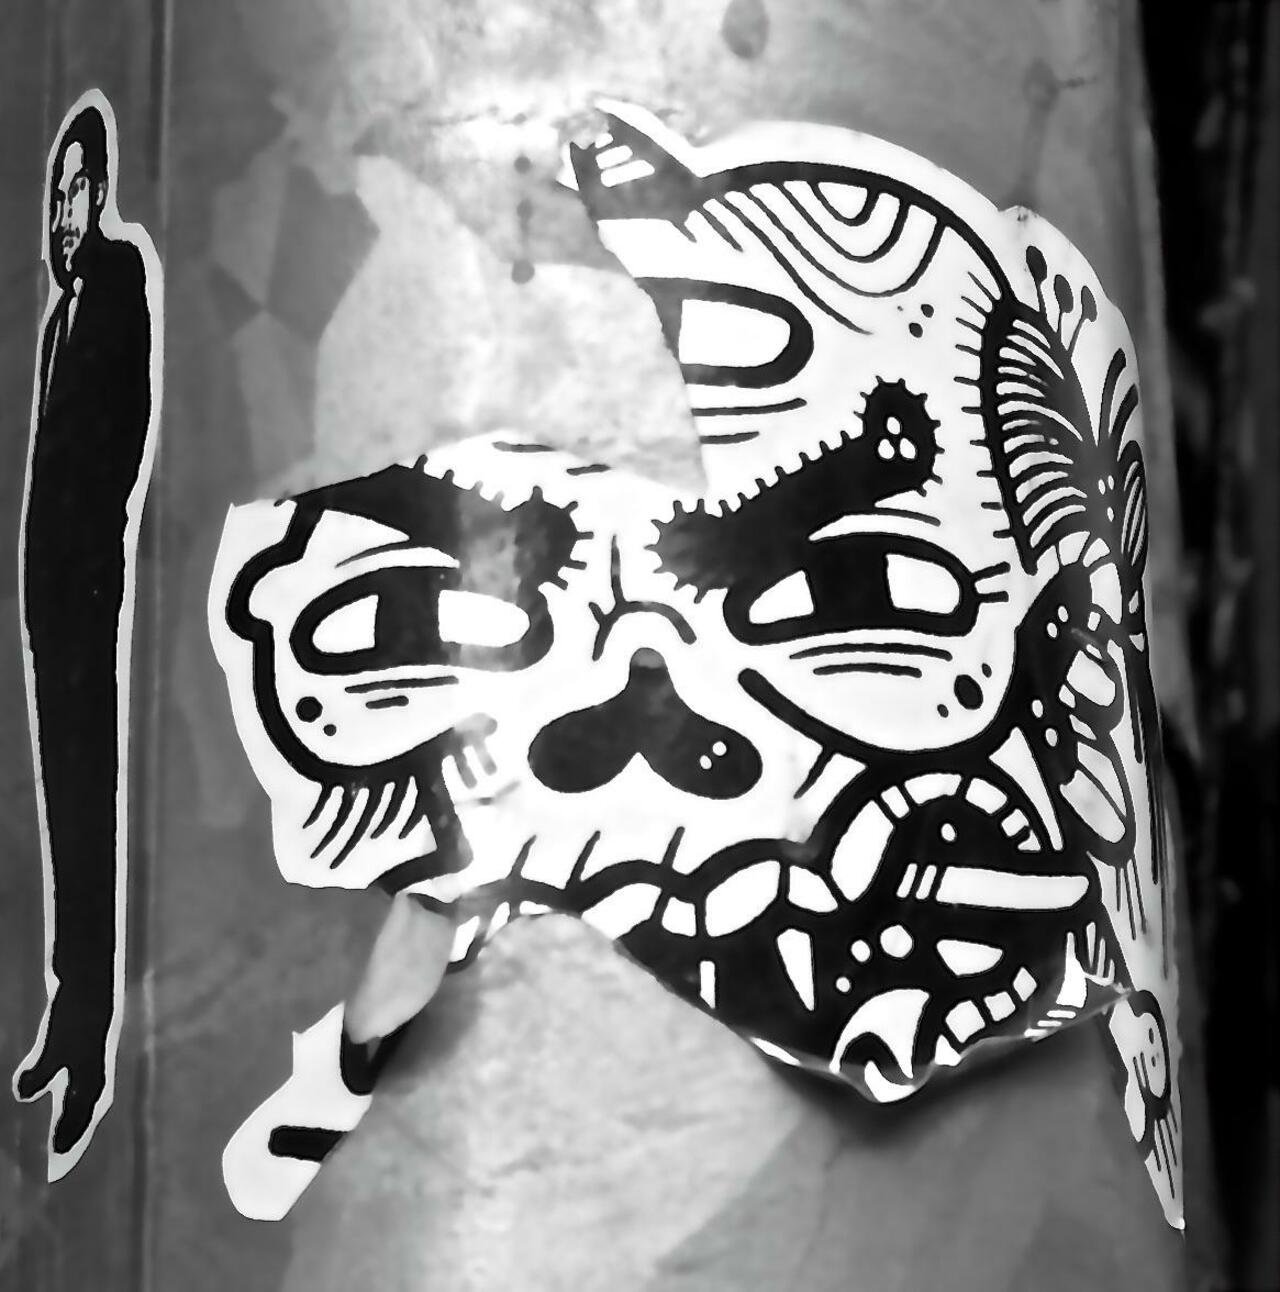 #streetart #sticker #graffiti #urban #art #design #streetphotography http://t.co/muXr7wT5LJ